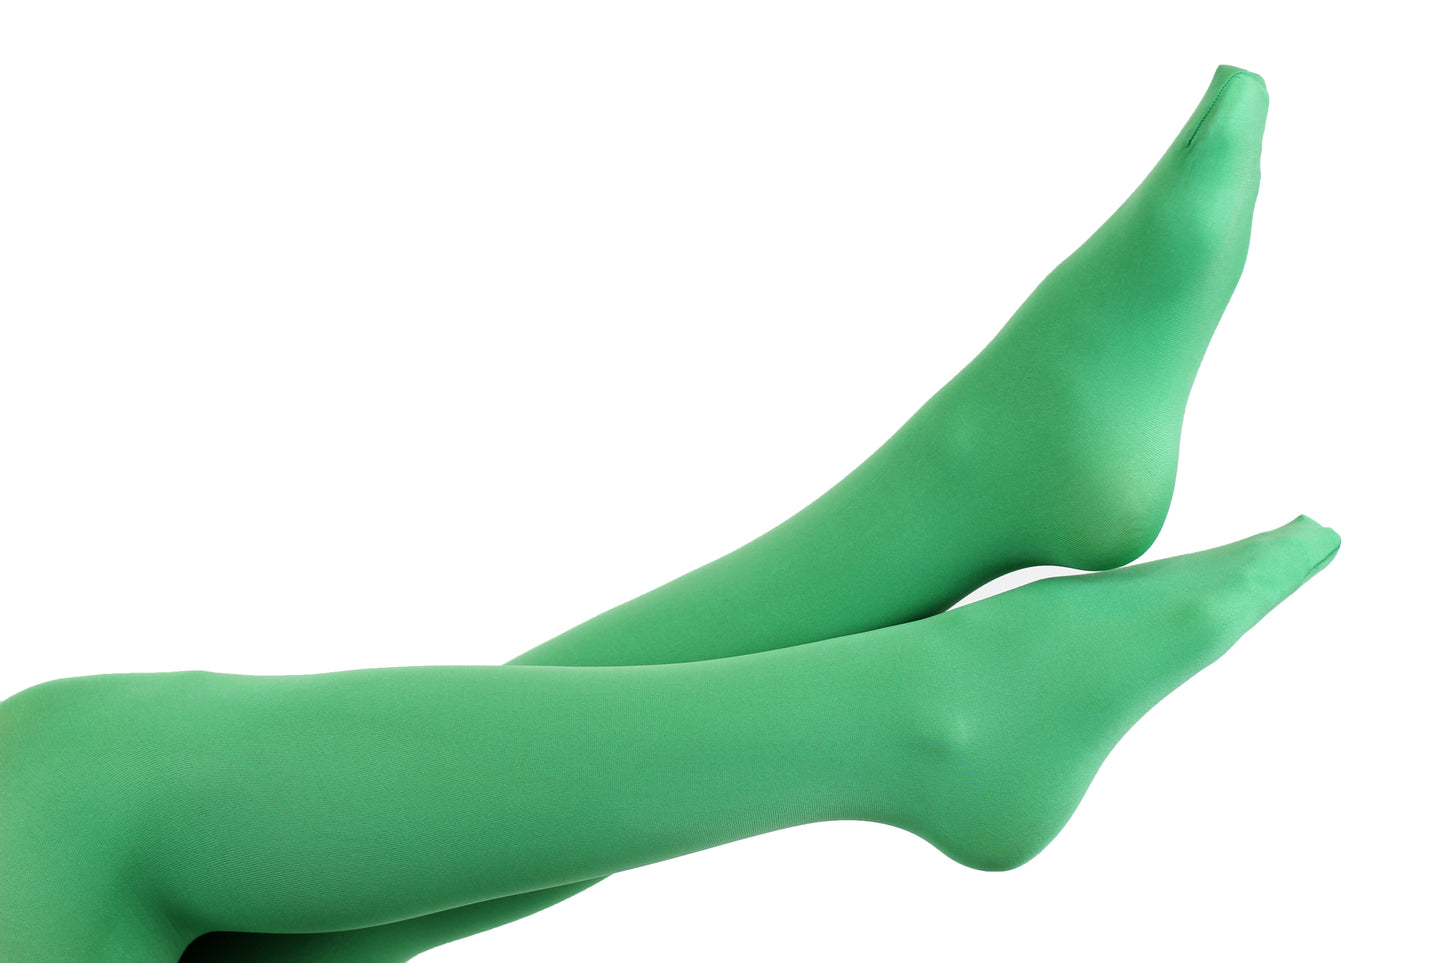 Green tights 40 den semi sheer biodegradable Aloe Vera hosiery ladder free tights